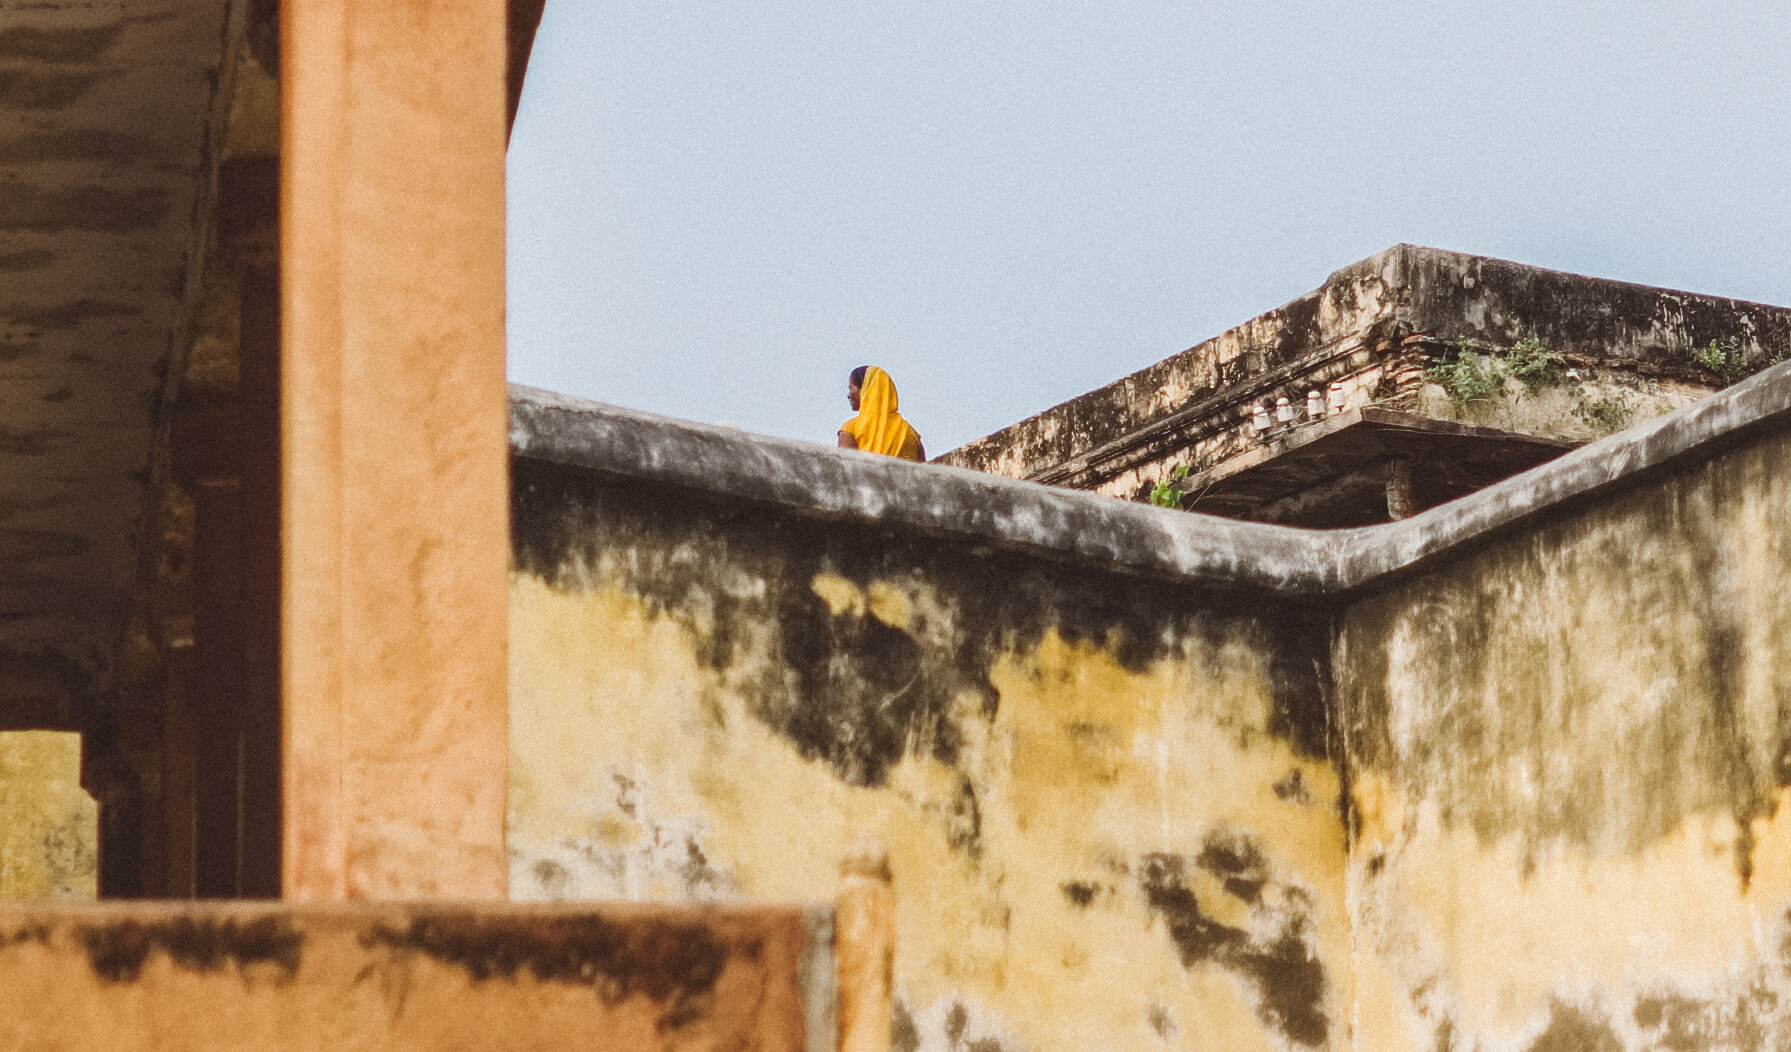 Roof Lady, Varanasi, Oct 2019.